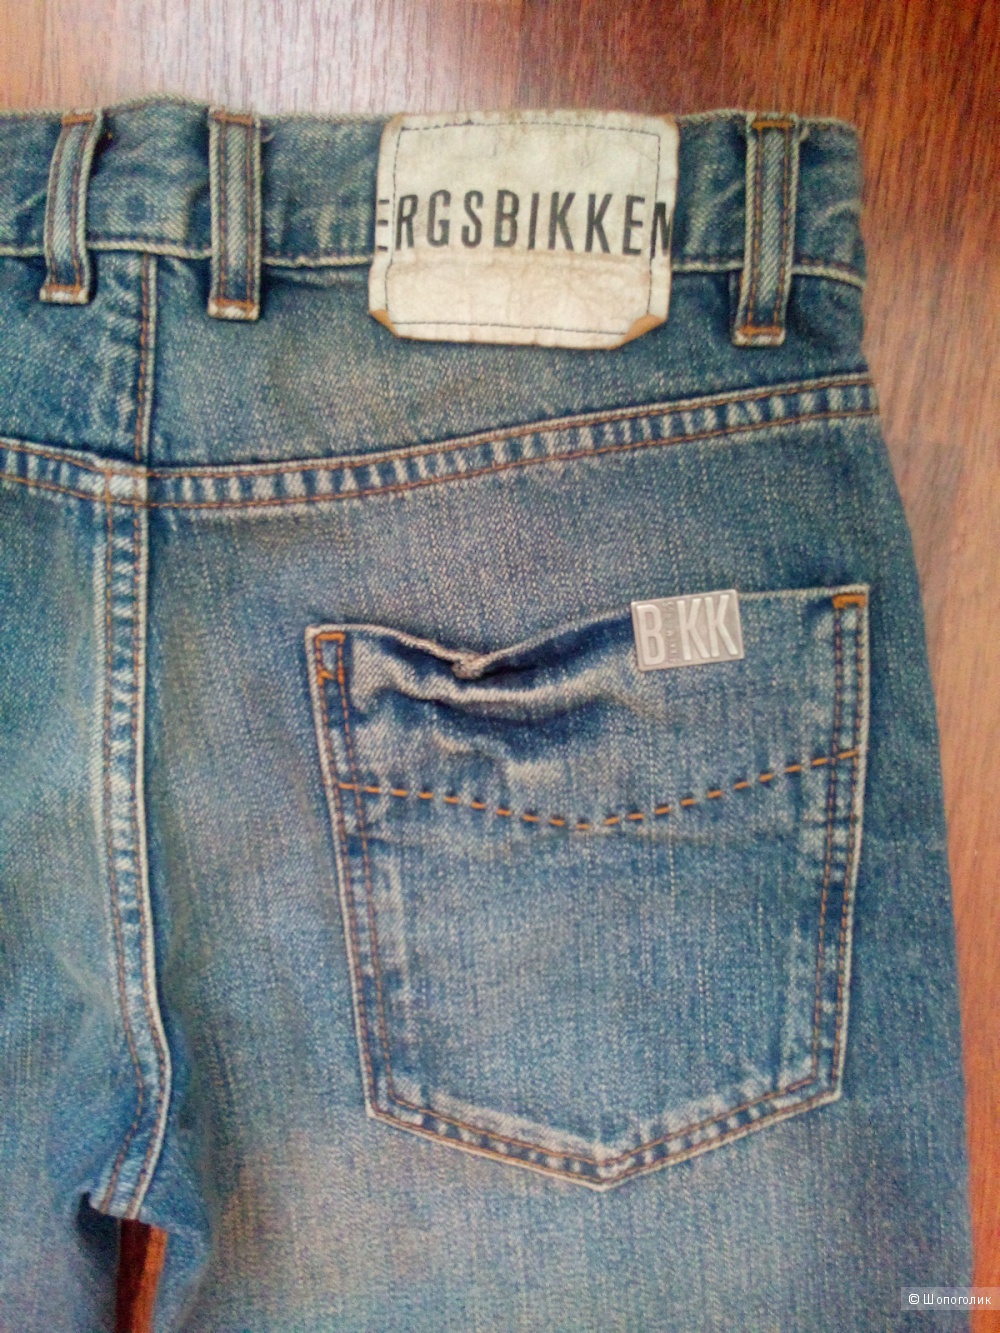 Bikkembergs джинсы мужские(можно как бойфренд )размер 28